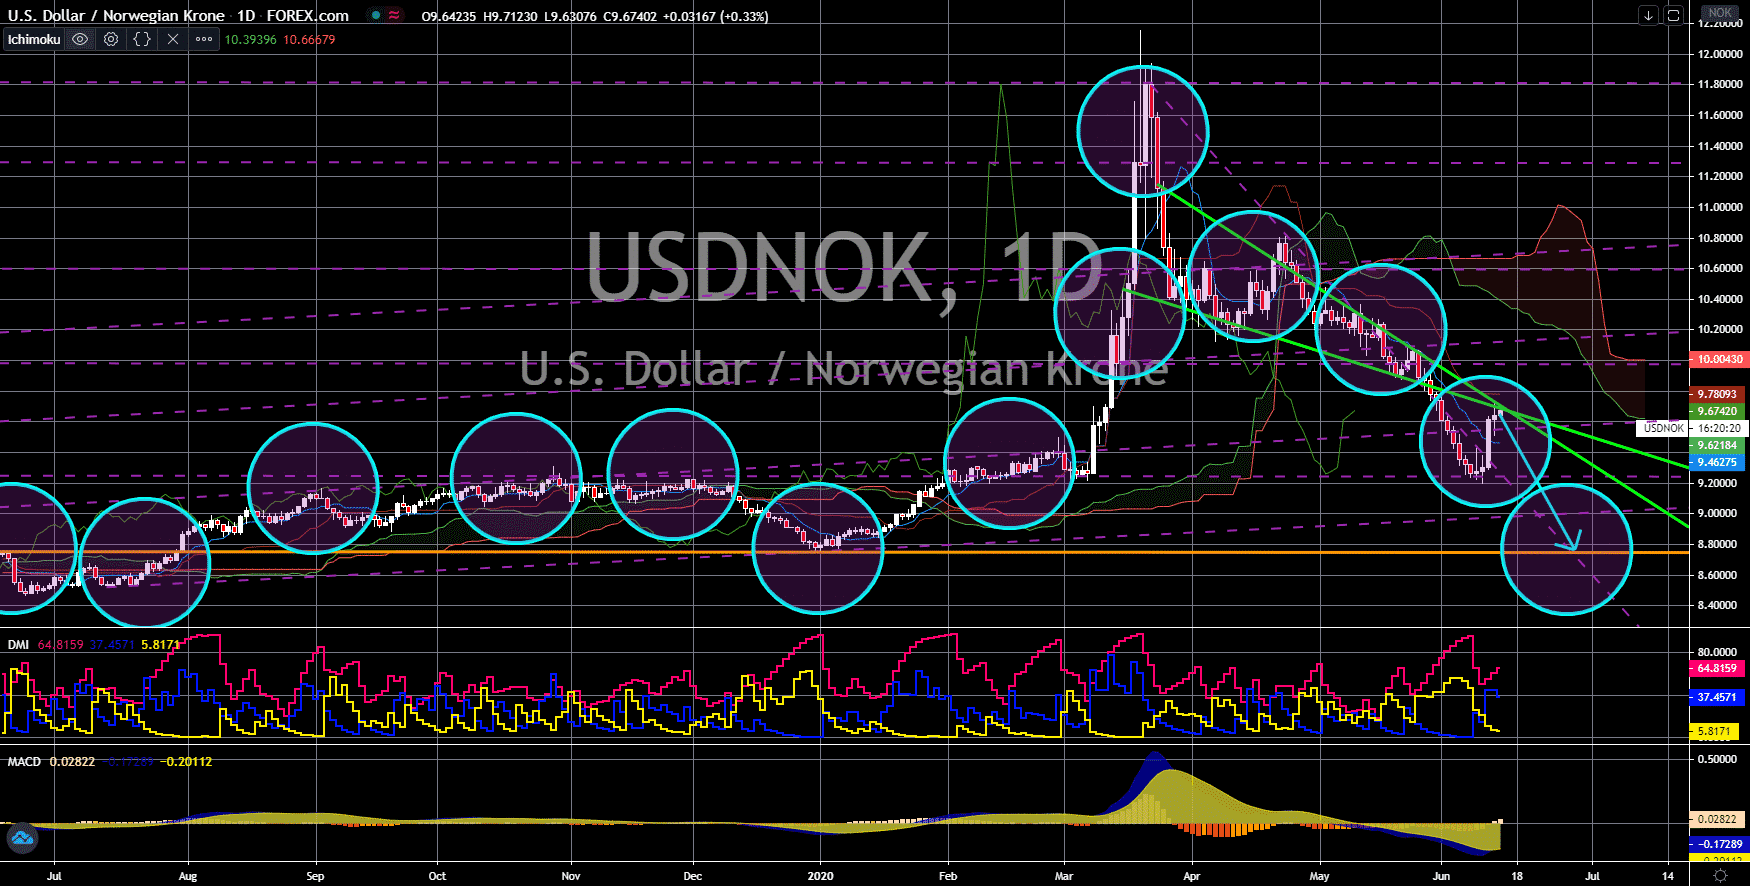 FinanceBrokerage - Notícias do Mercado: Gráfico USD/NOK